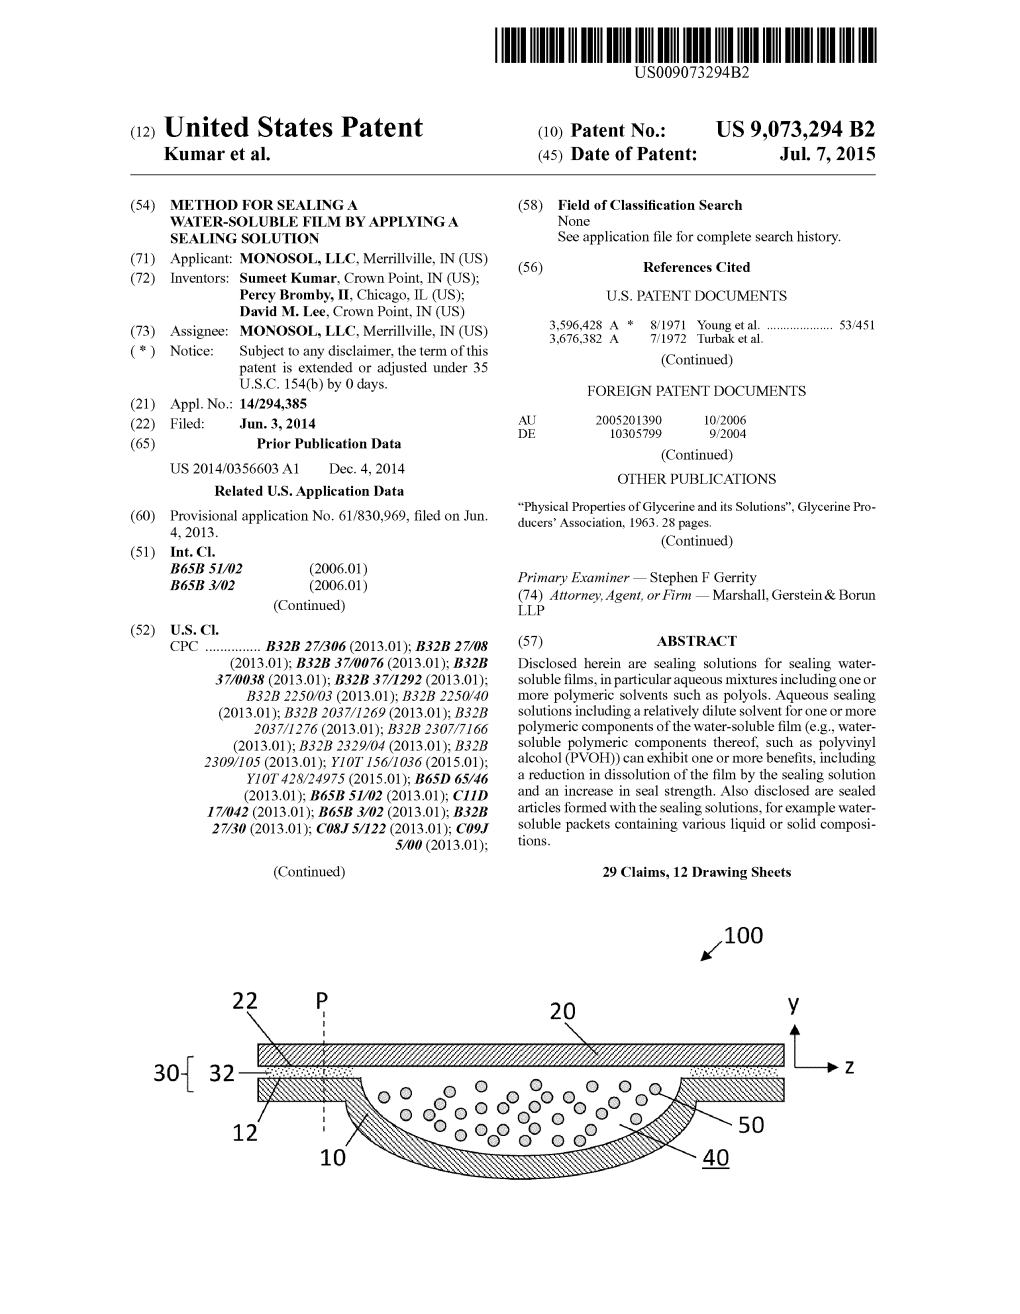 (12) United States Patent (10) Patent No.: US 9,073,294 B2 Kumar Et Al